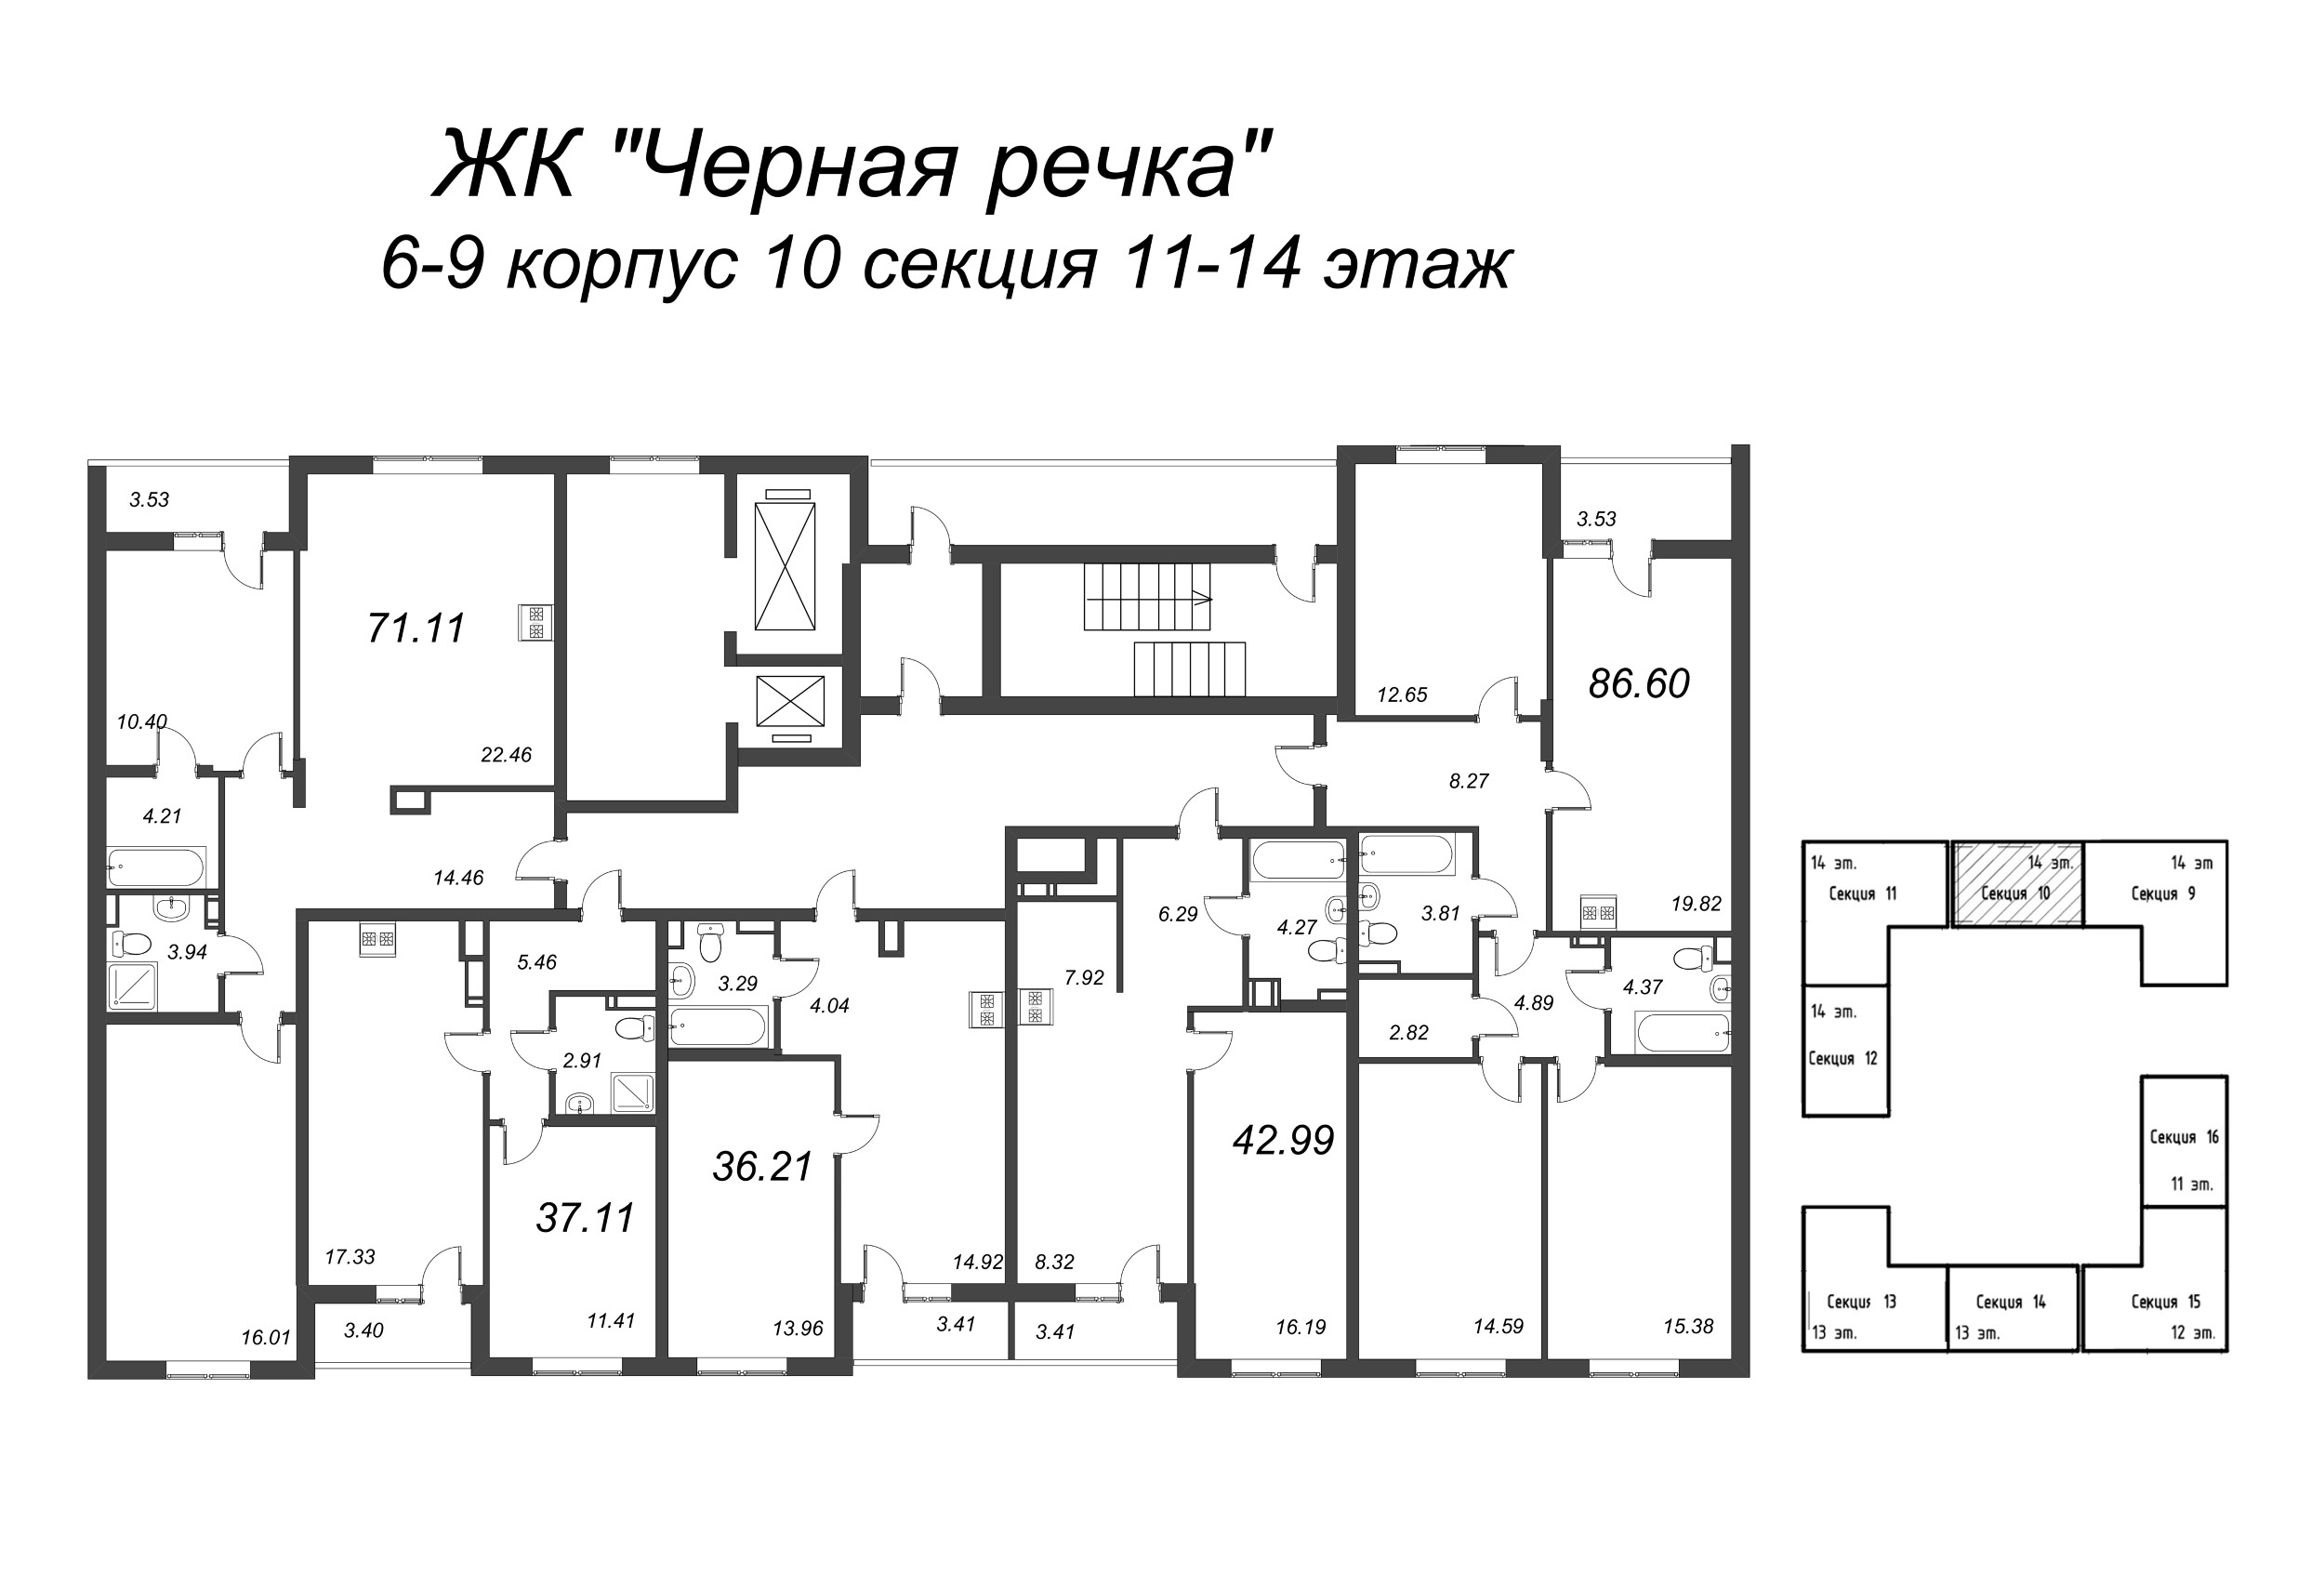 2-комнатная (Евро) квартира, 36.21 м² - планировка этажа